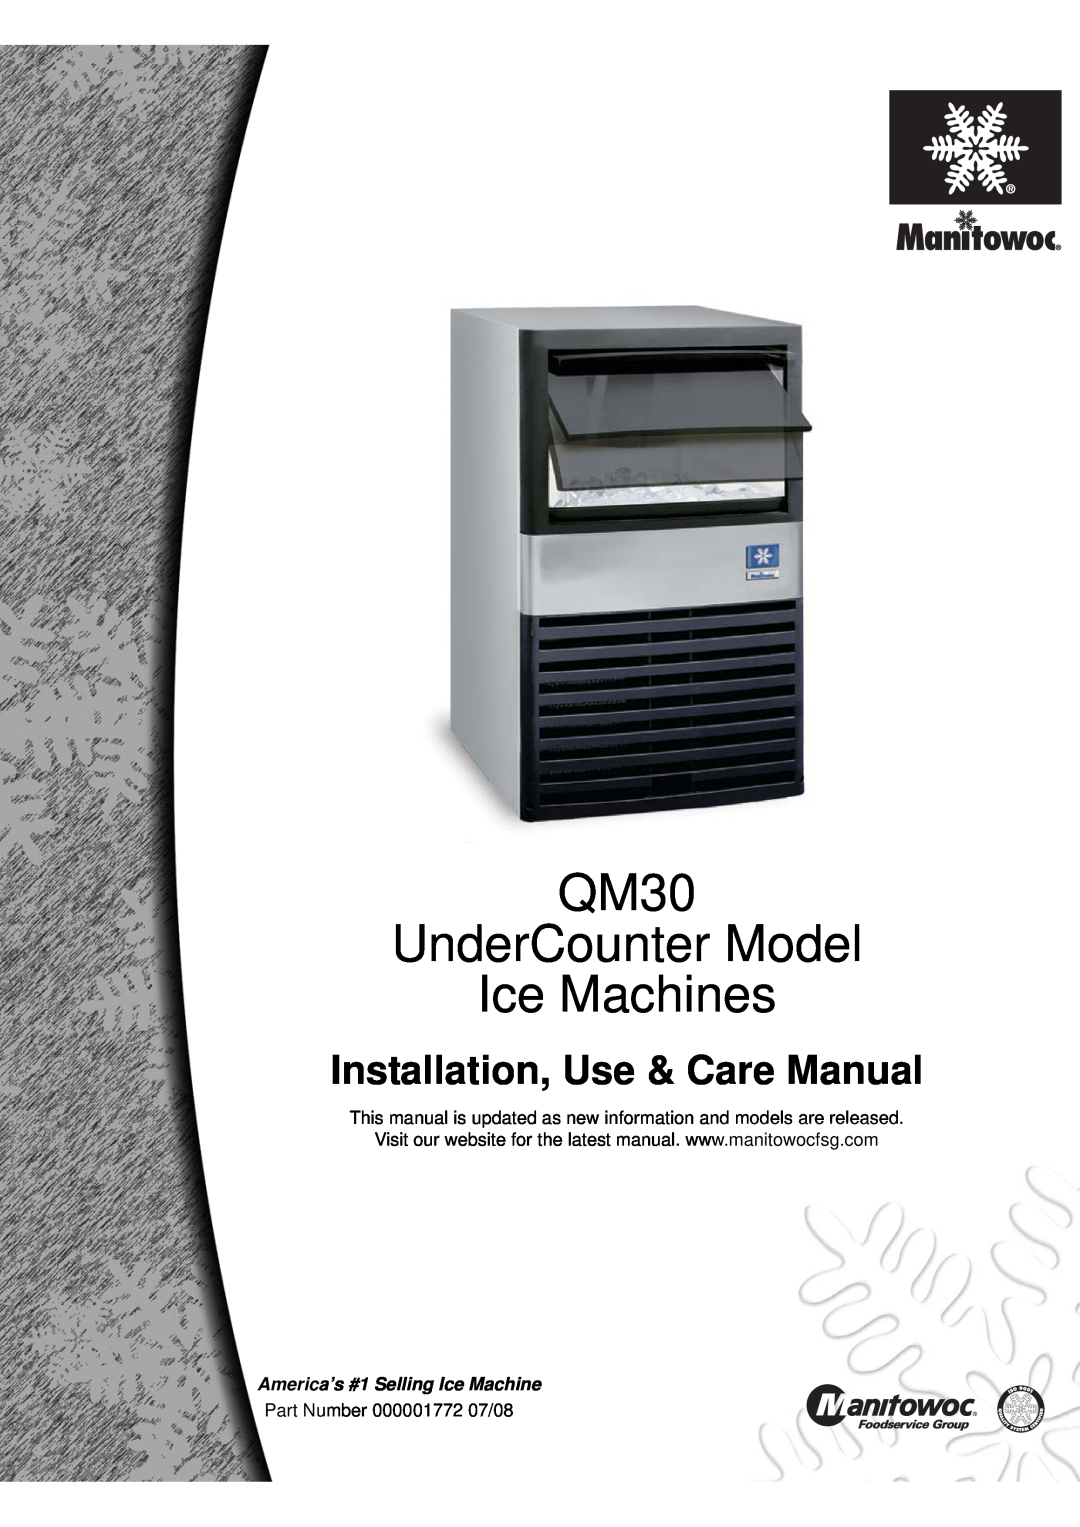 Manitowoc Ice manual QM30 UnderCounter Model Ice Machines, Installation, Use & Care Manual 